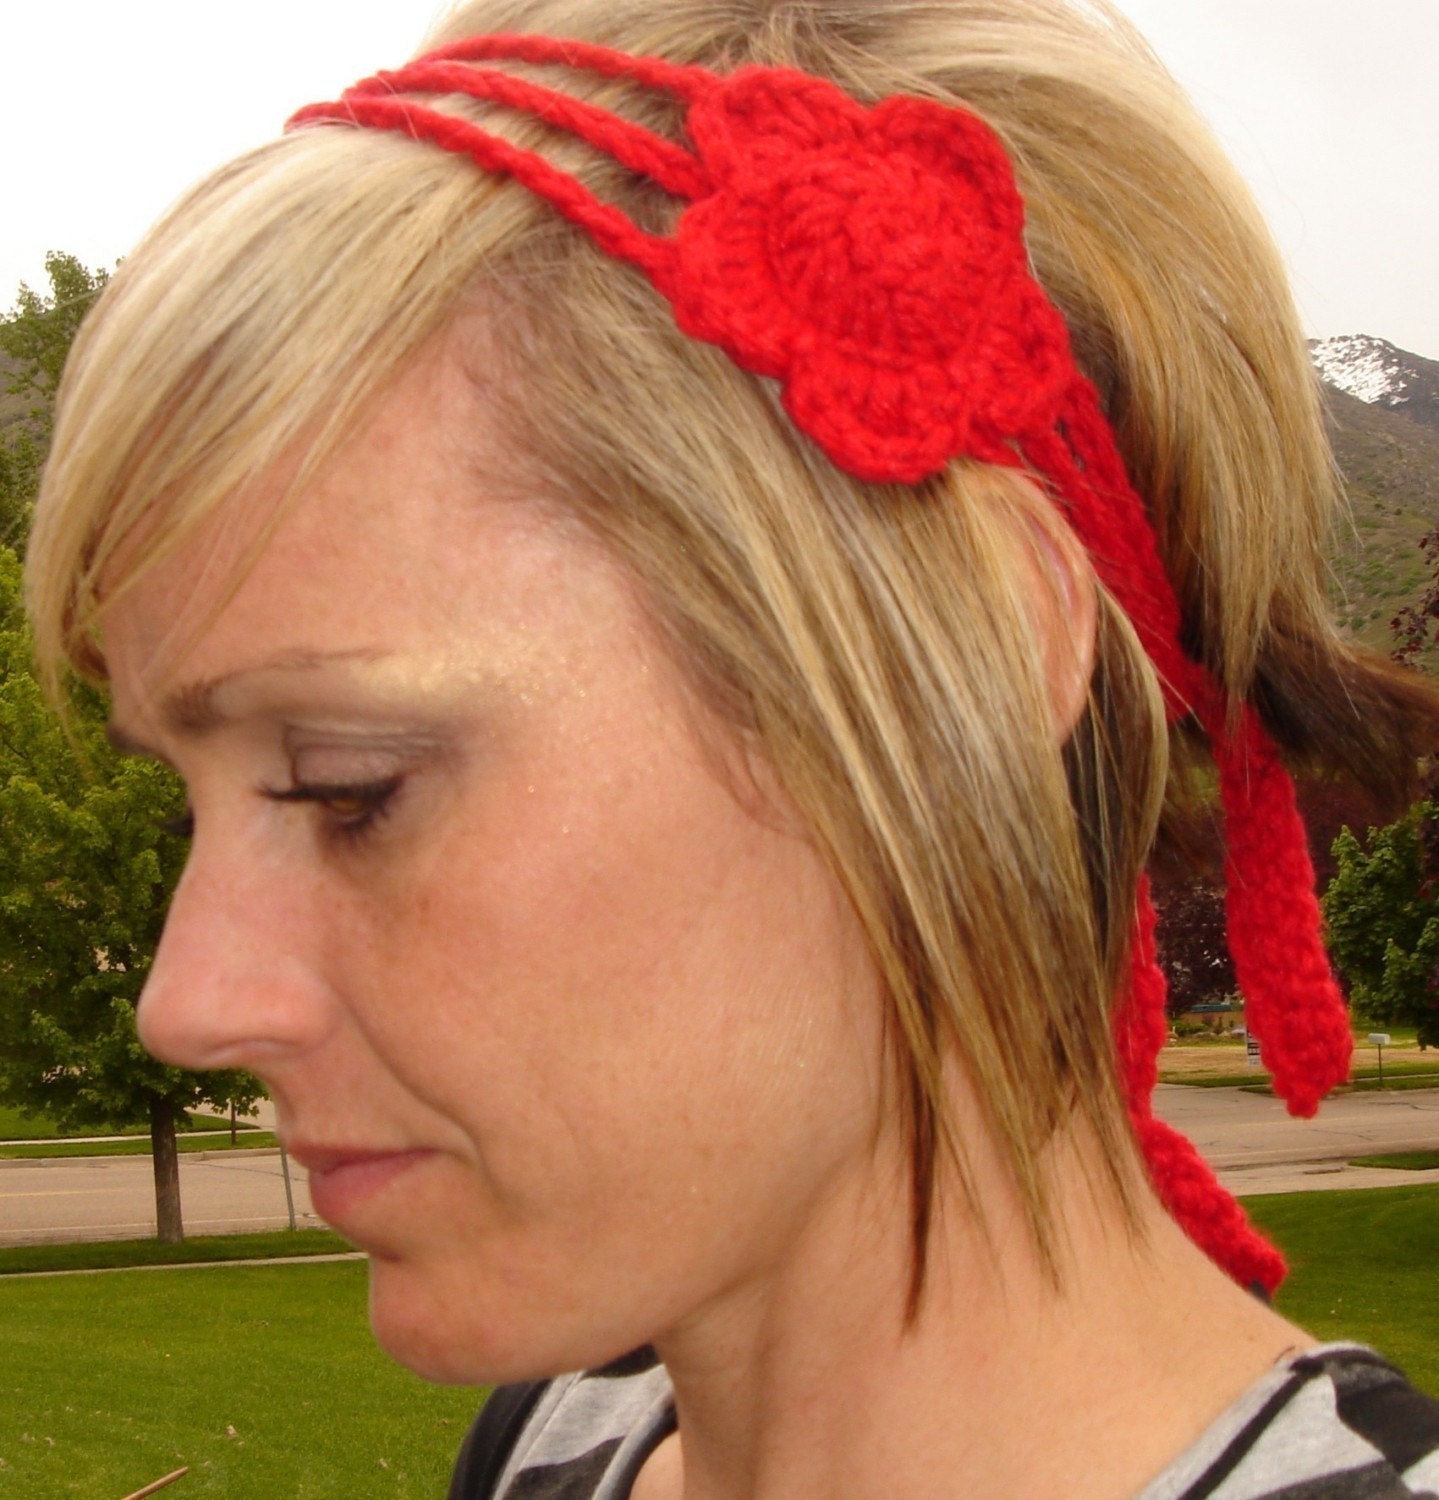 Crochet Flower Headband